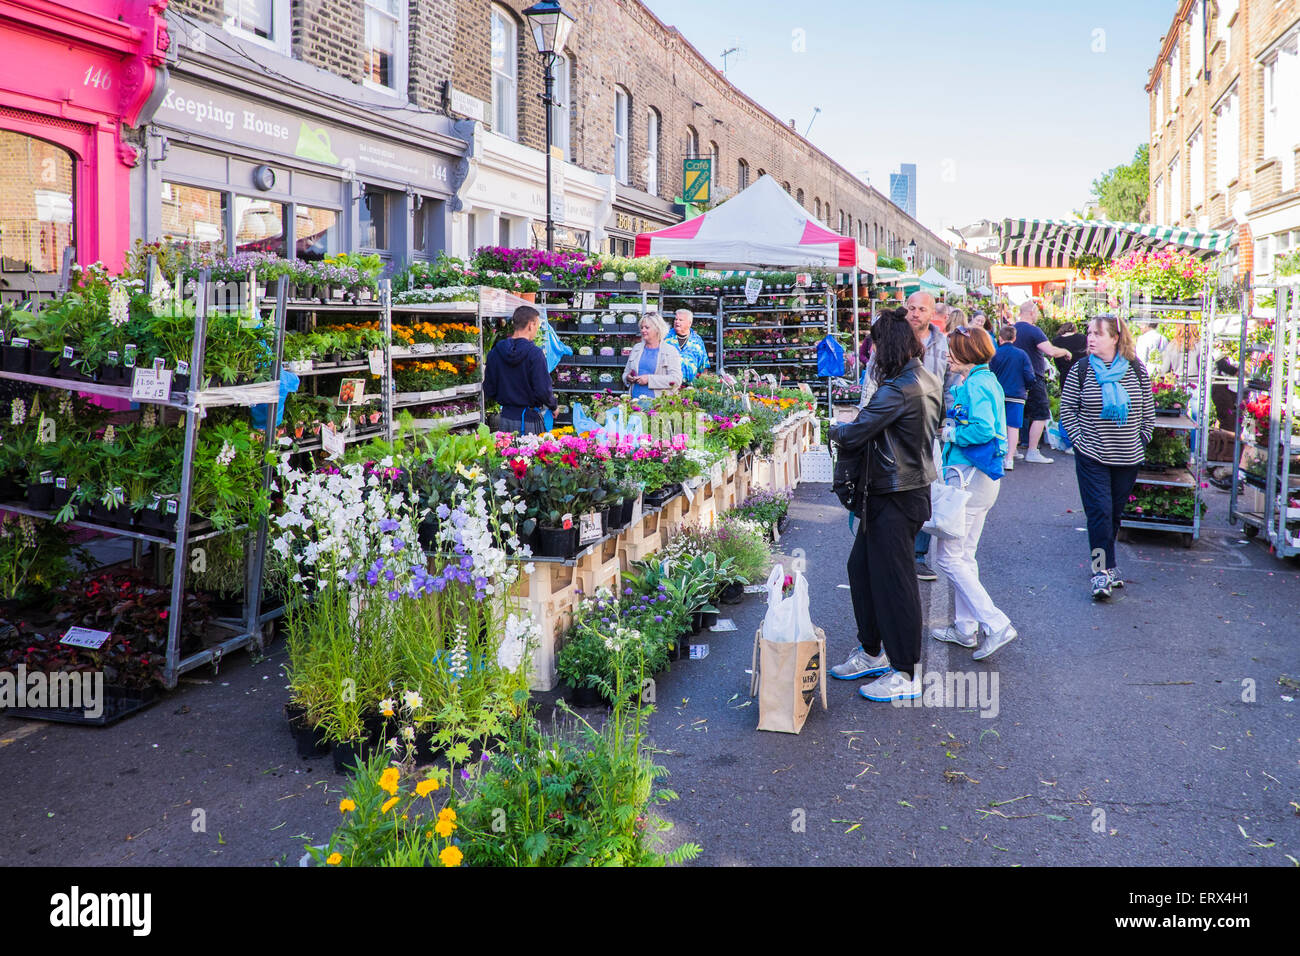 Columbia road flower market, East London, England, Regno Unito Foto Stock